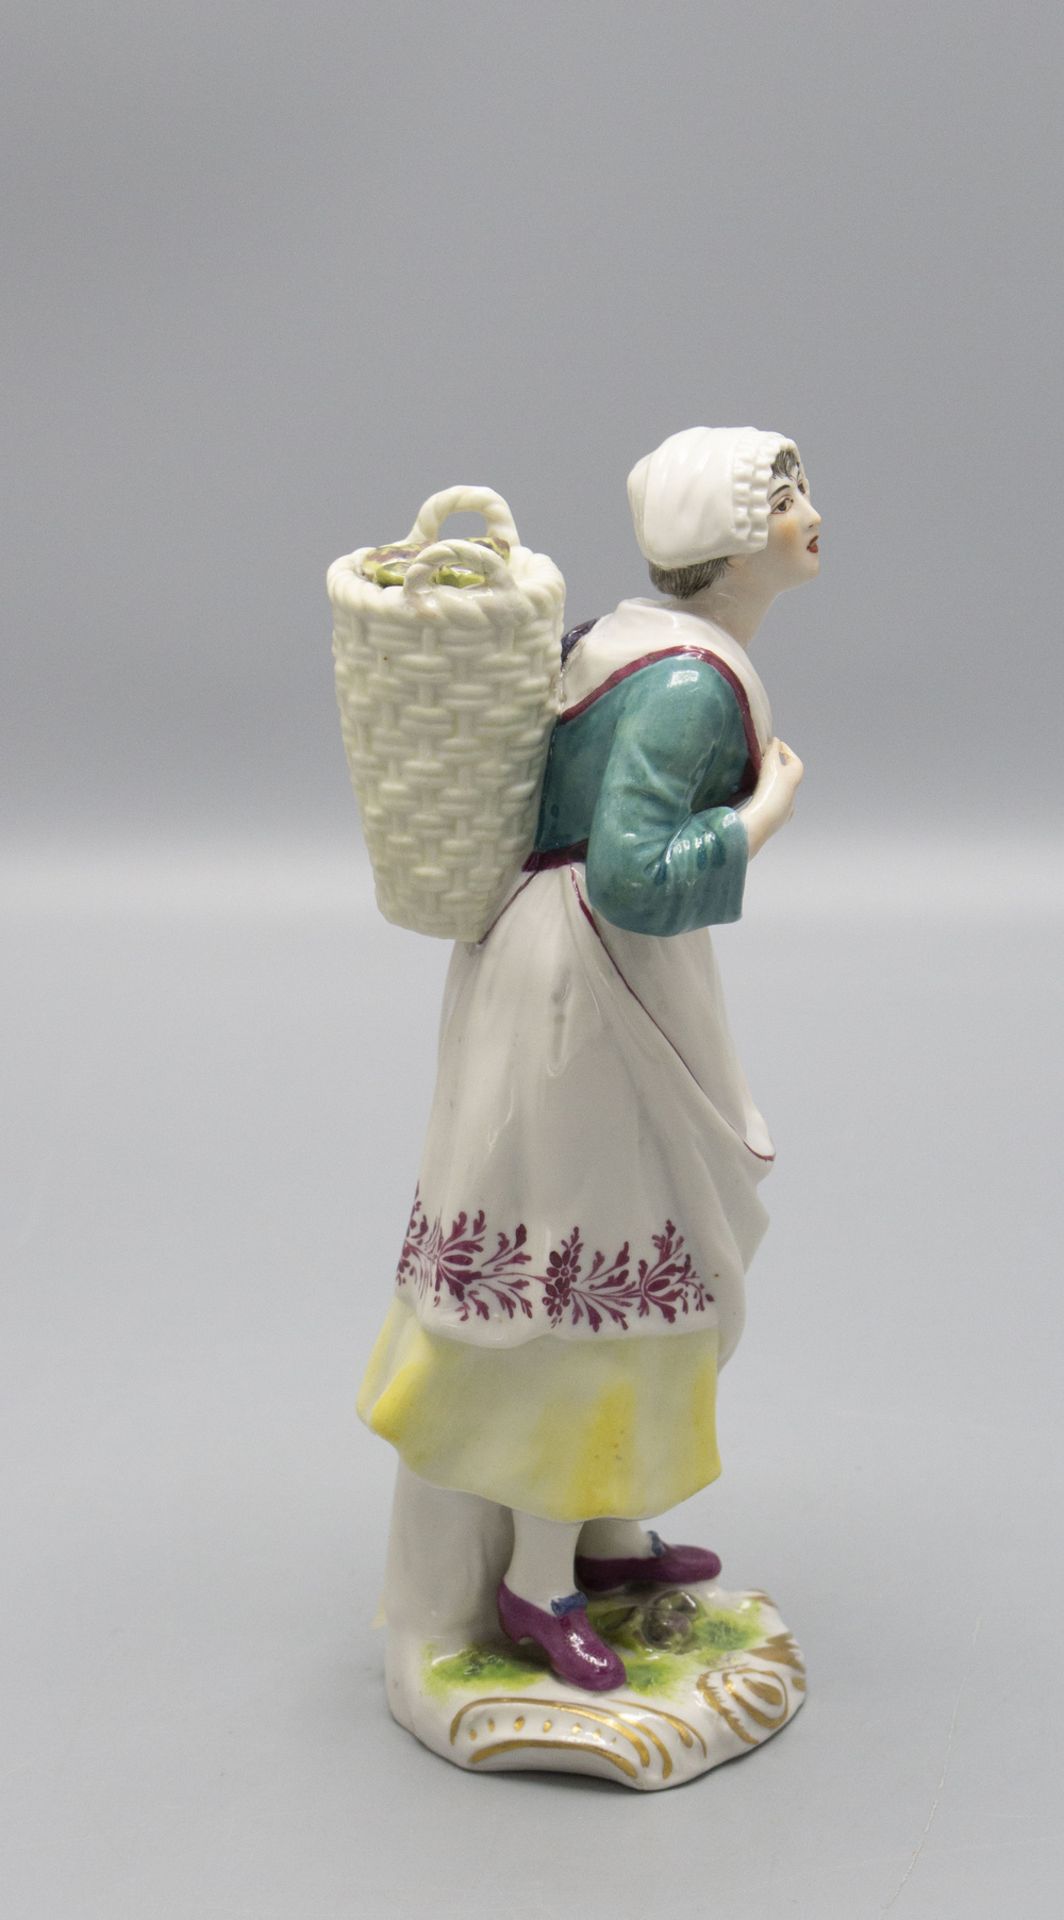 Junge Bäuerin mit einem Korb Artischocken / A young female peasant with a basket full of ... - Image 2 of 5